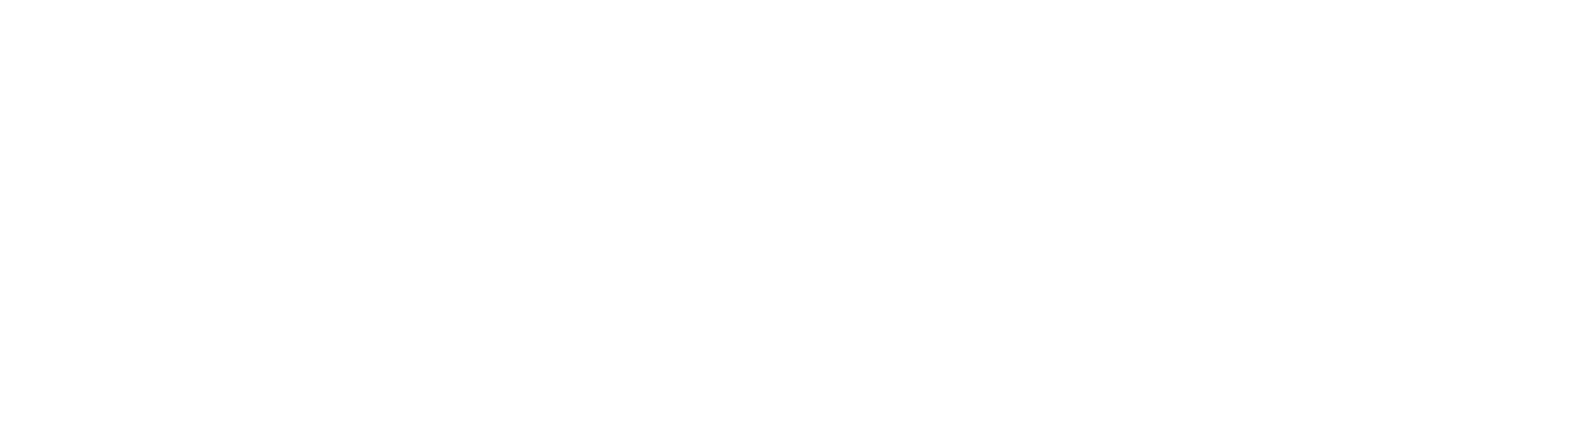 Maria Norda Design